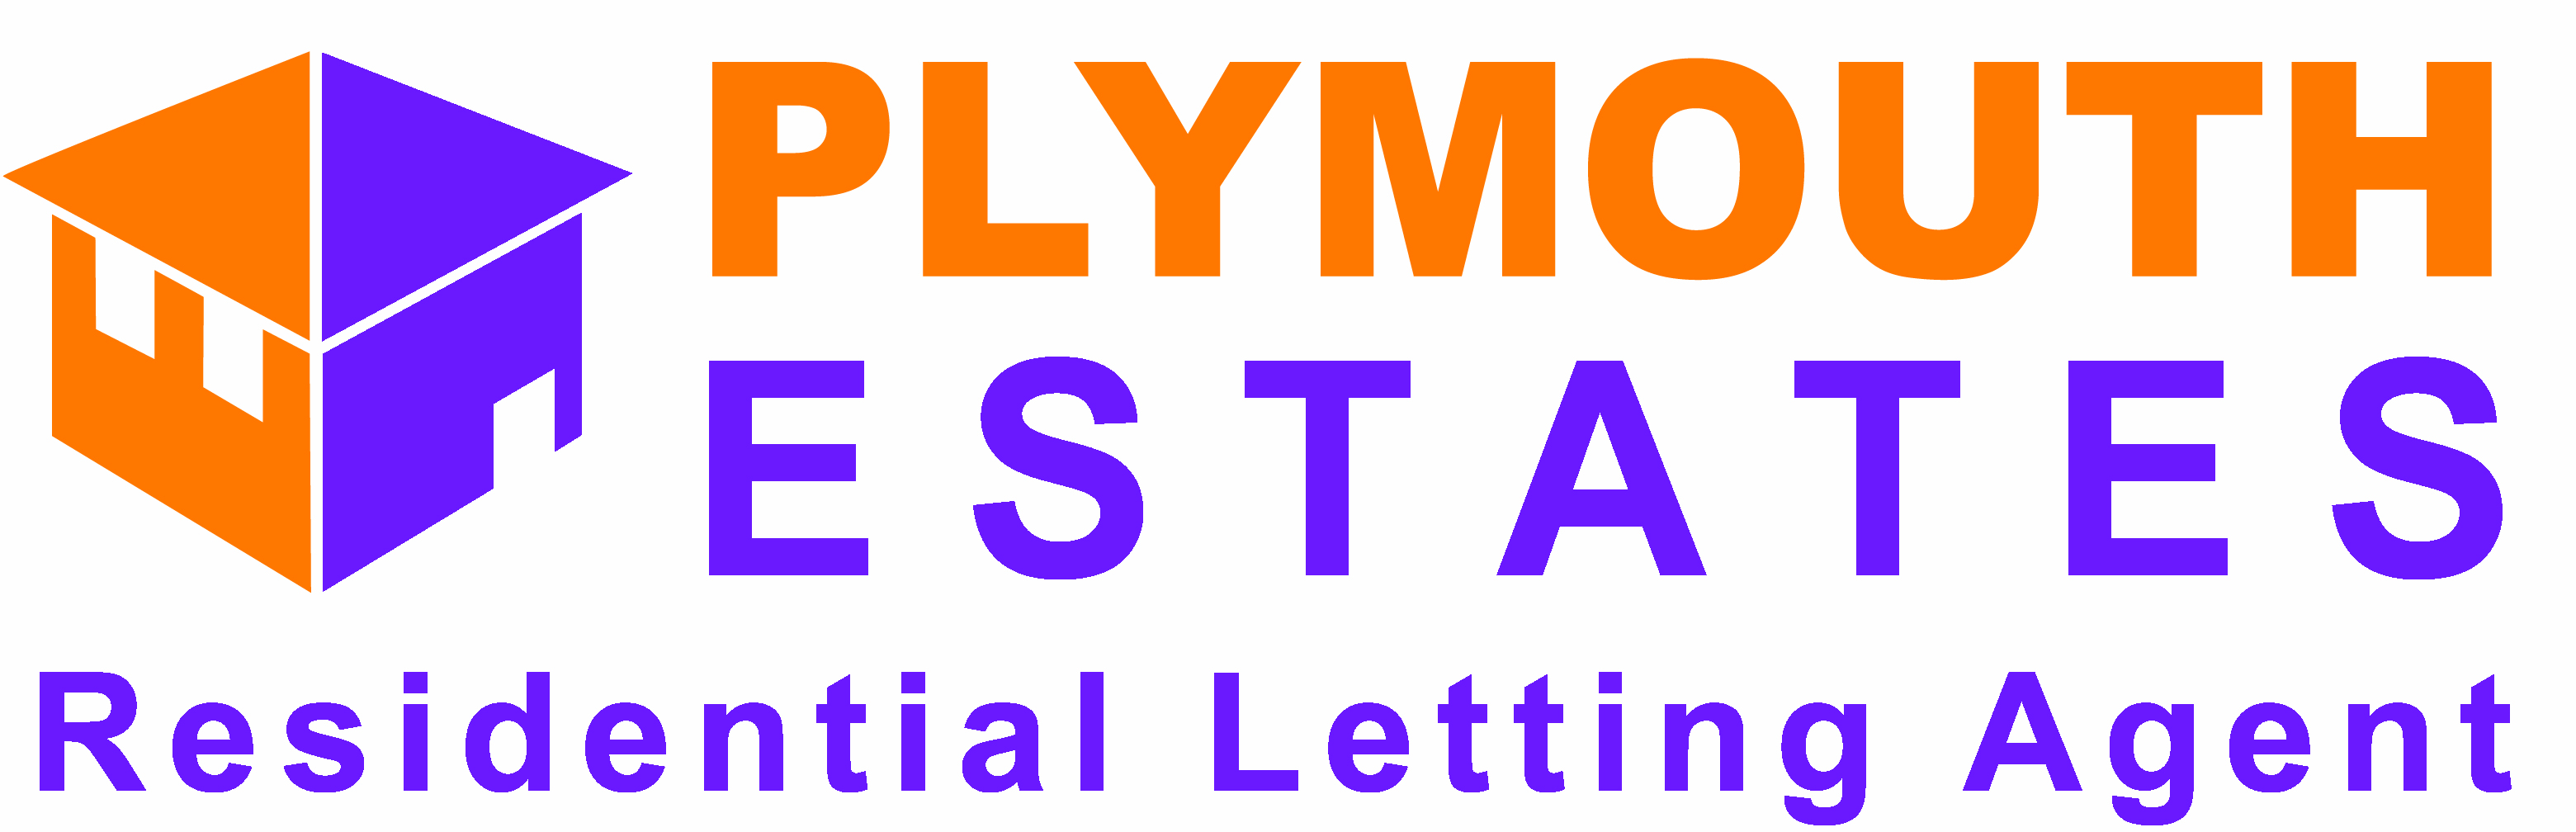 Plymouth Estates logo2.jpg